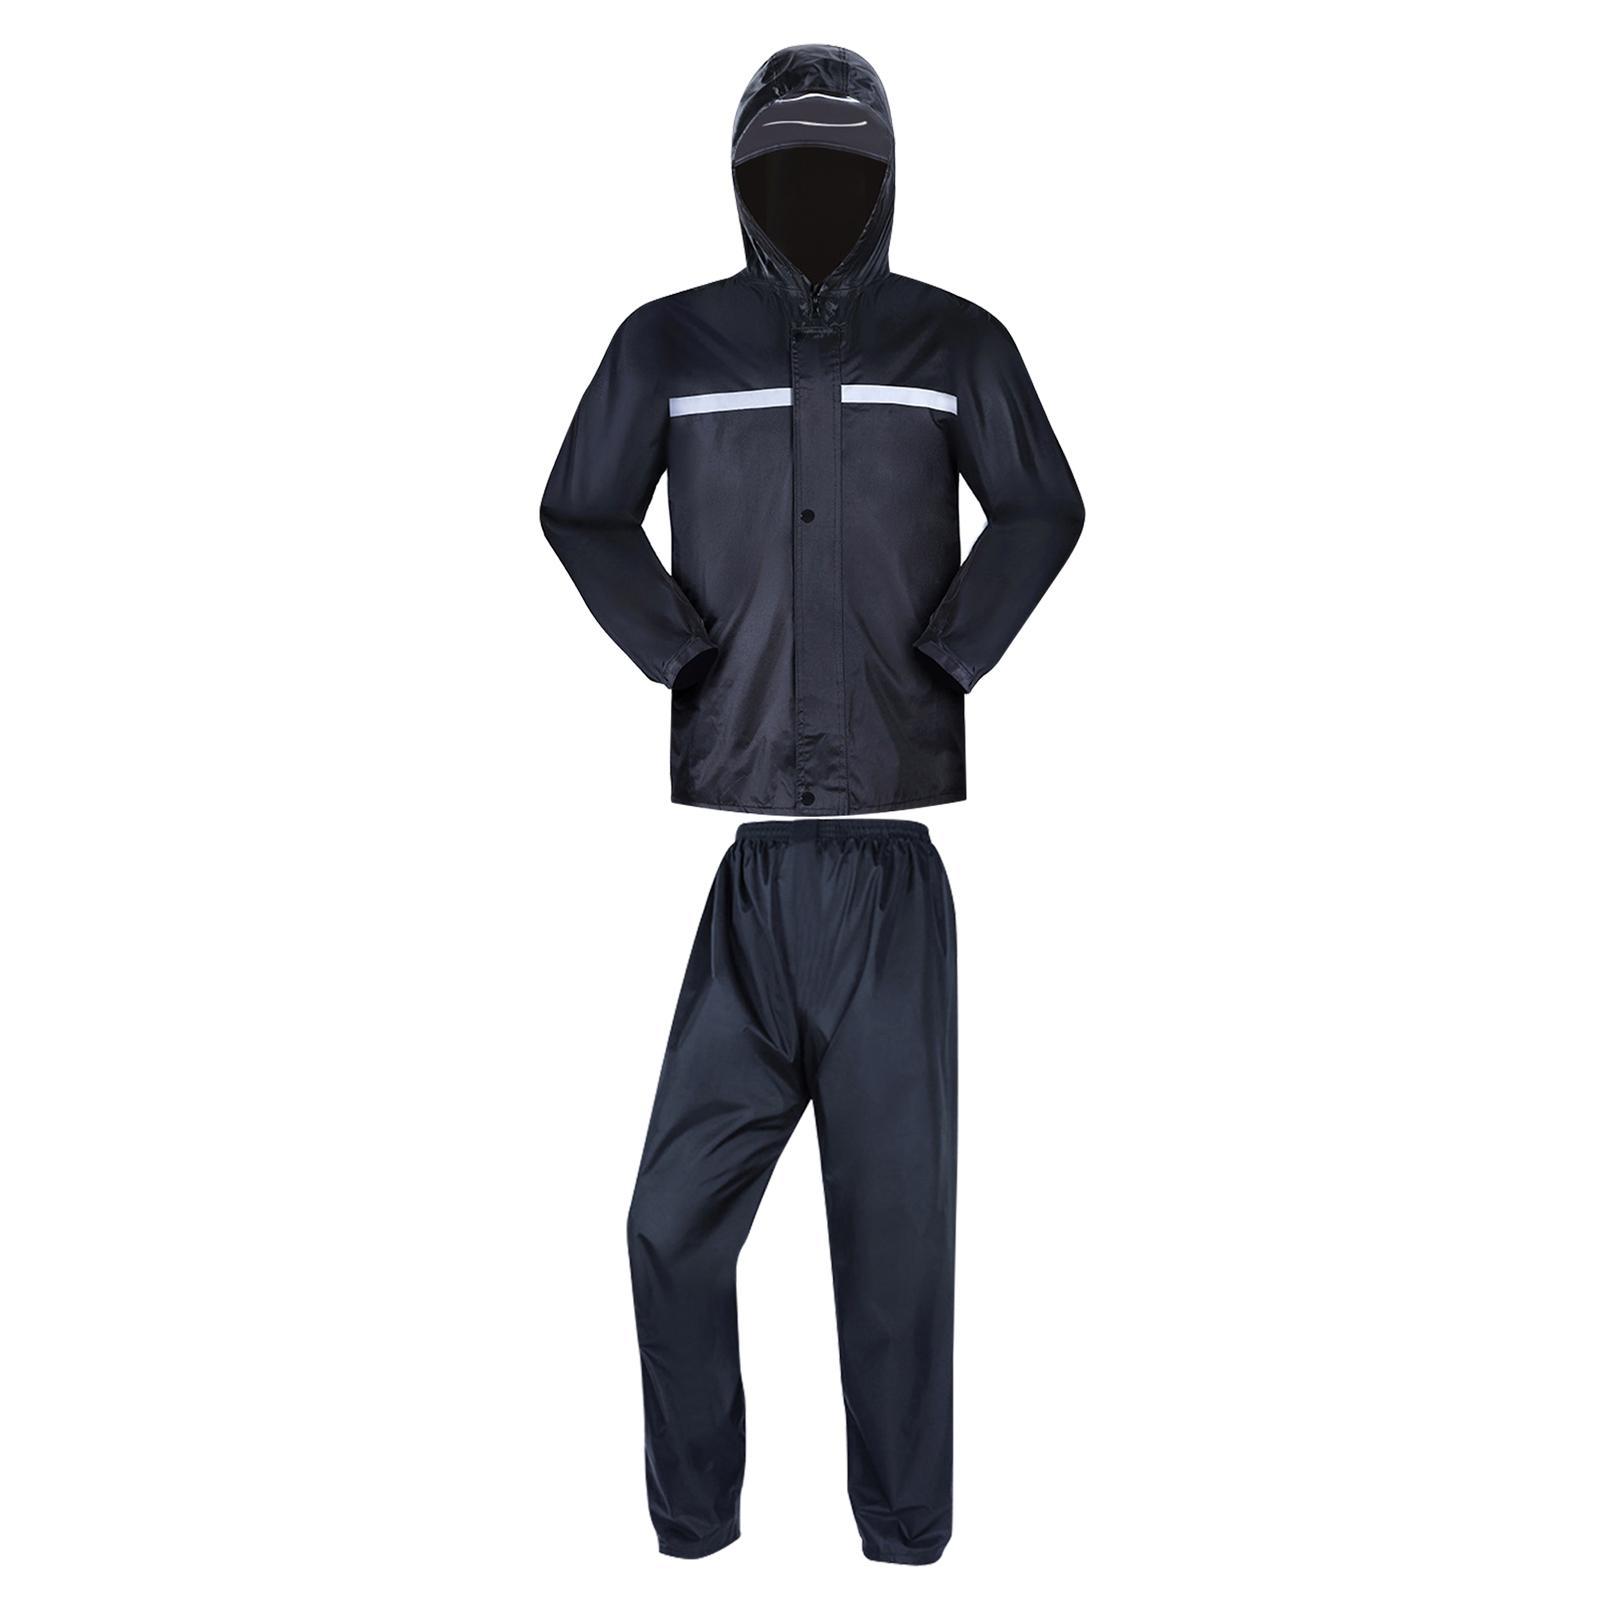 Rain suits Waterproof Rain Jacket Lightweight Rain Coat Pants Raincoat for Cycling Camping